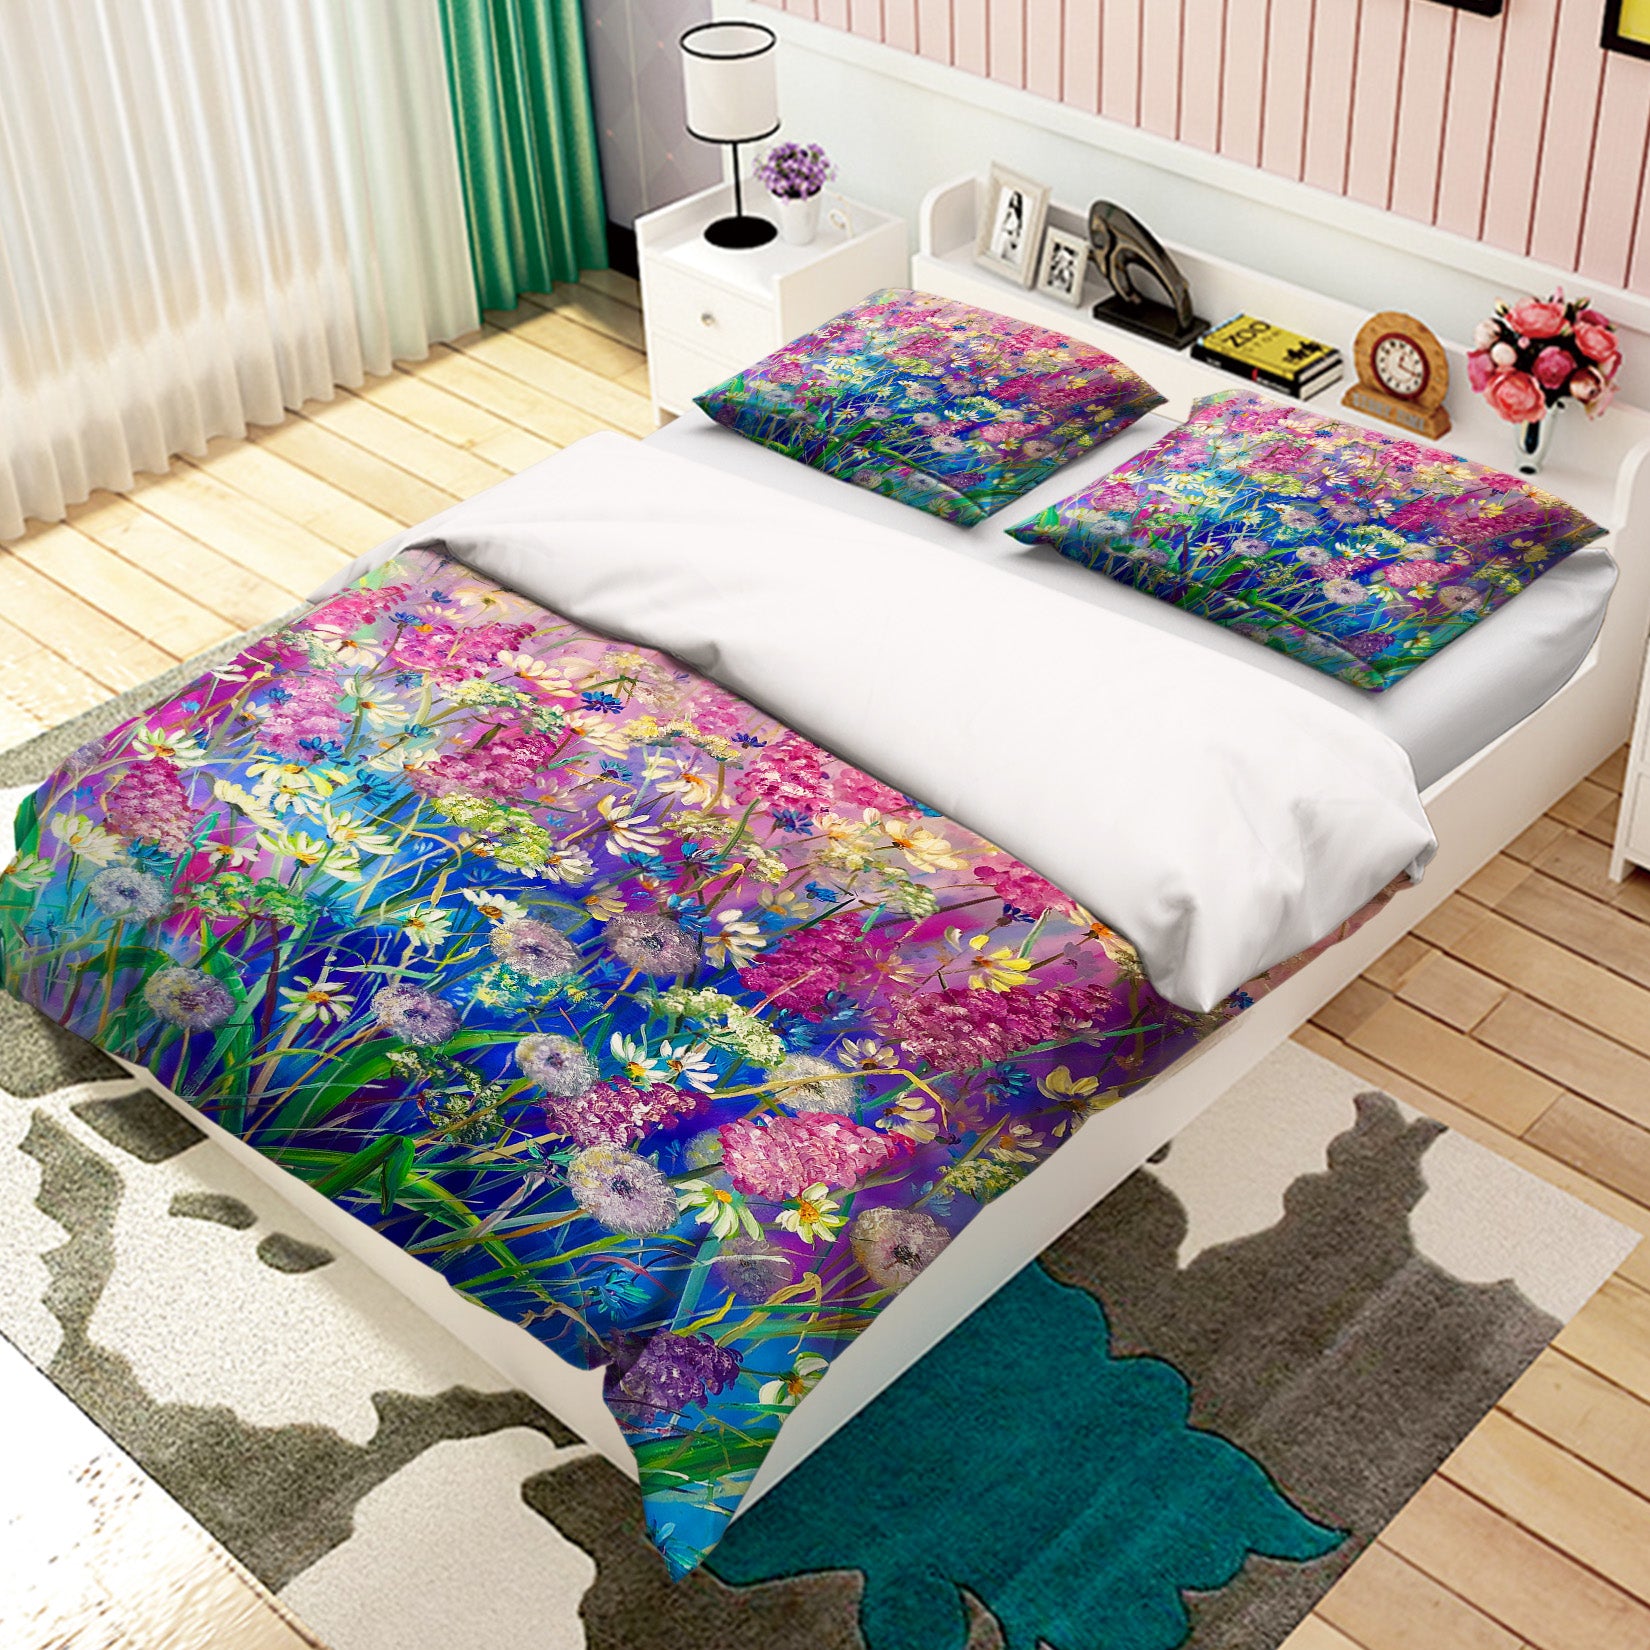 3D Colorful Garden 564 Skromova Marina Bedding Bed Pillowcases Quilt